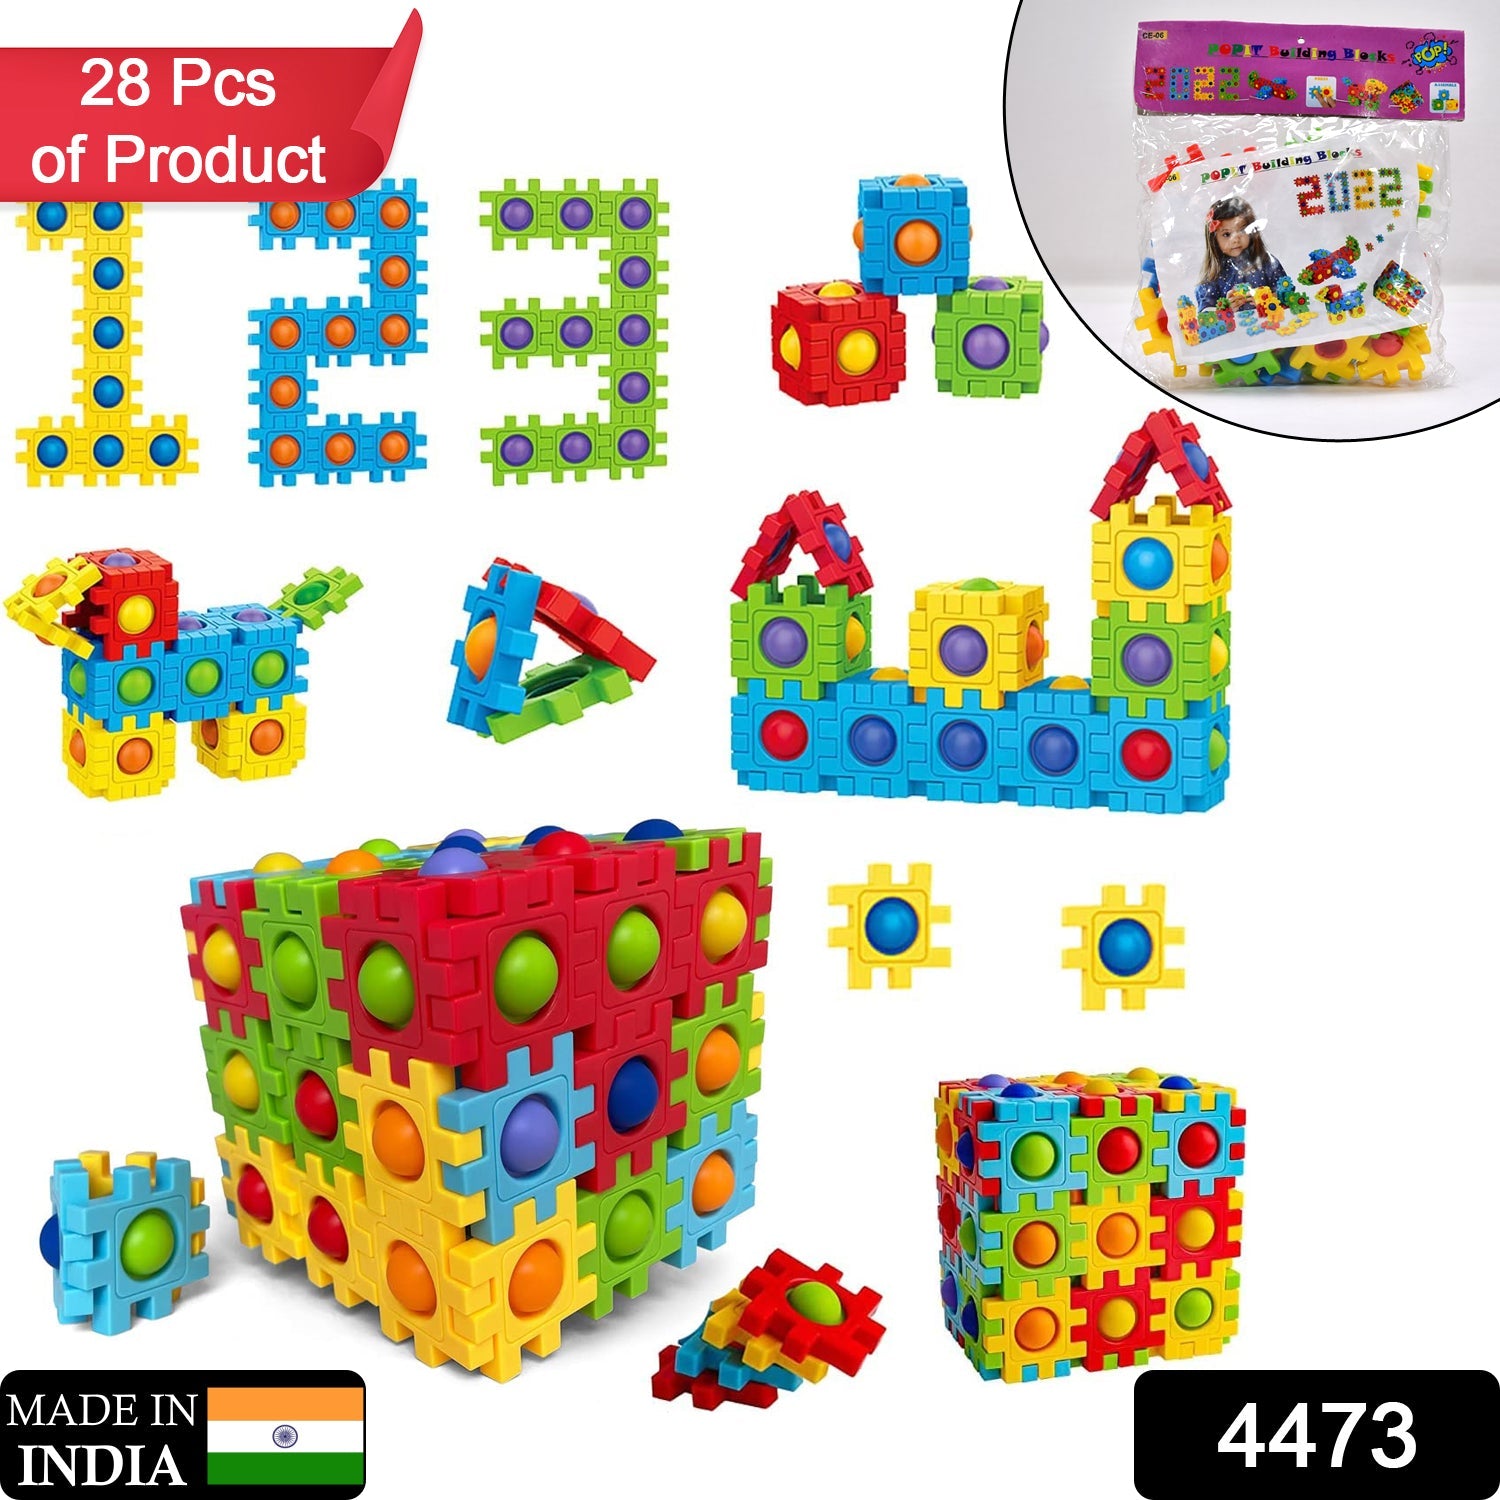 4473 Popit Building Blocks Toy For Kids & Adult Use ( 28 pcs Product ) DeoDap